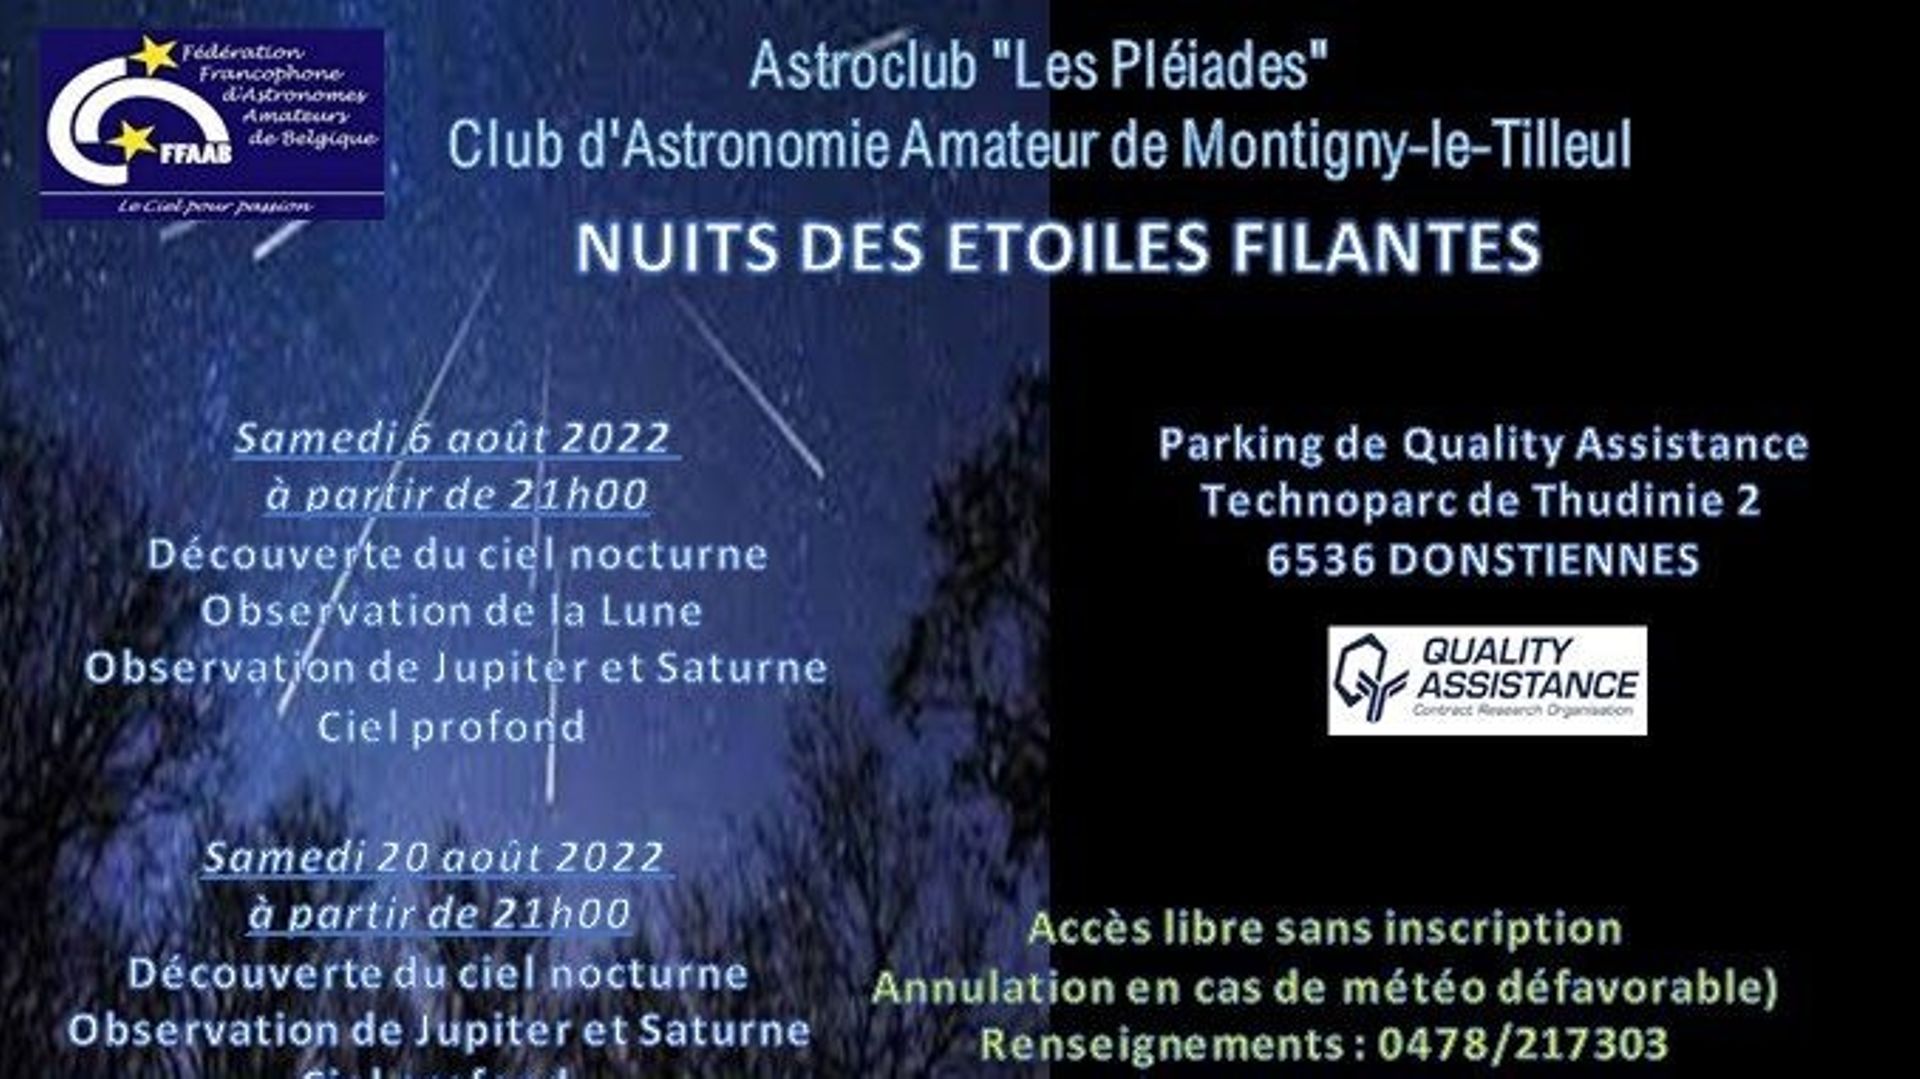 La nuit des étoiles filantes de l' Astro Club "les Pléiades"